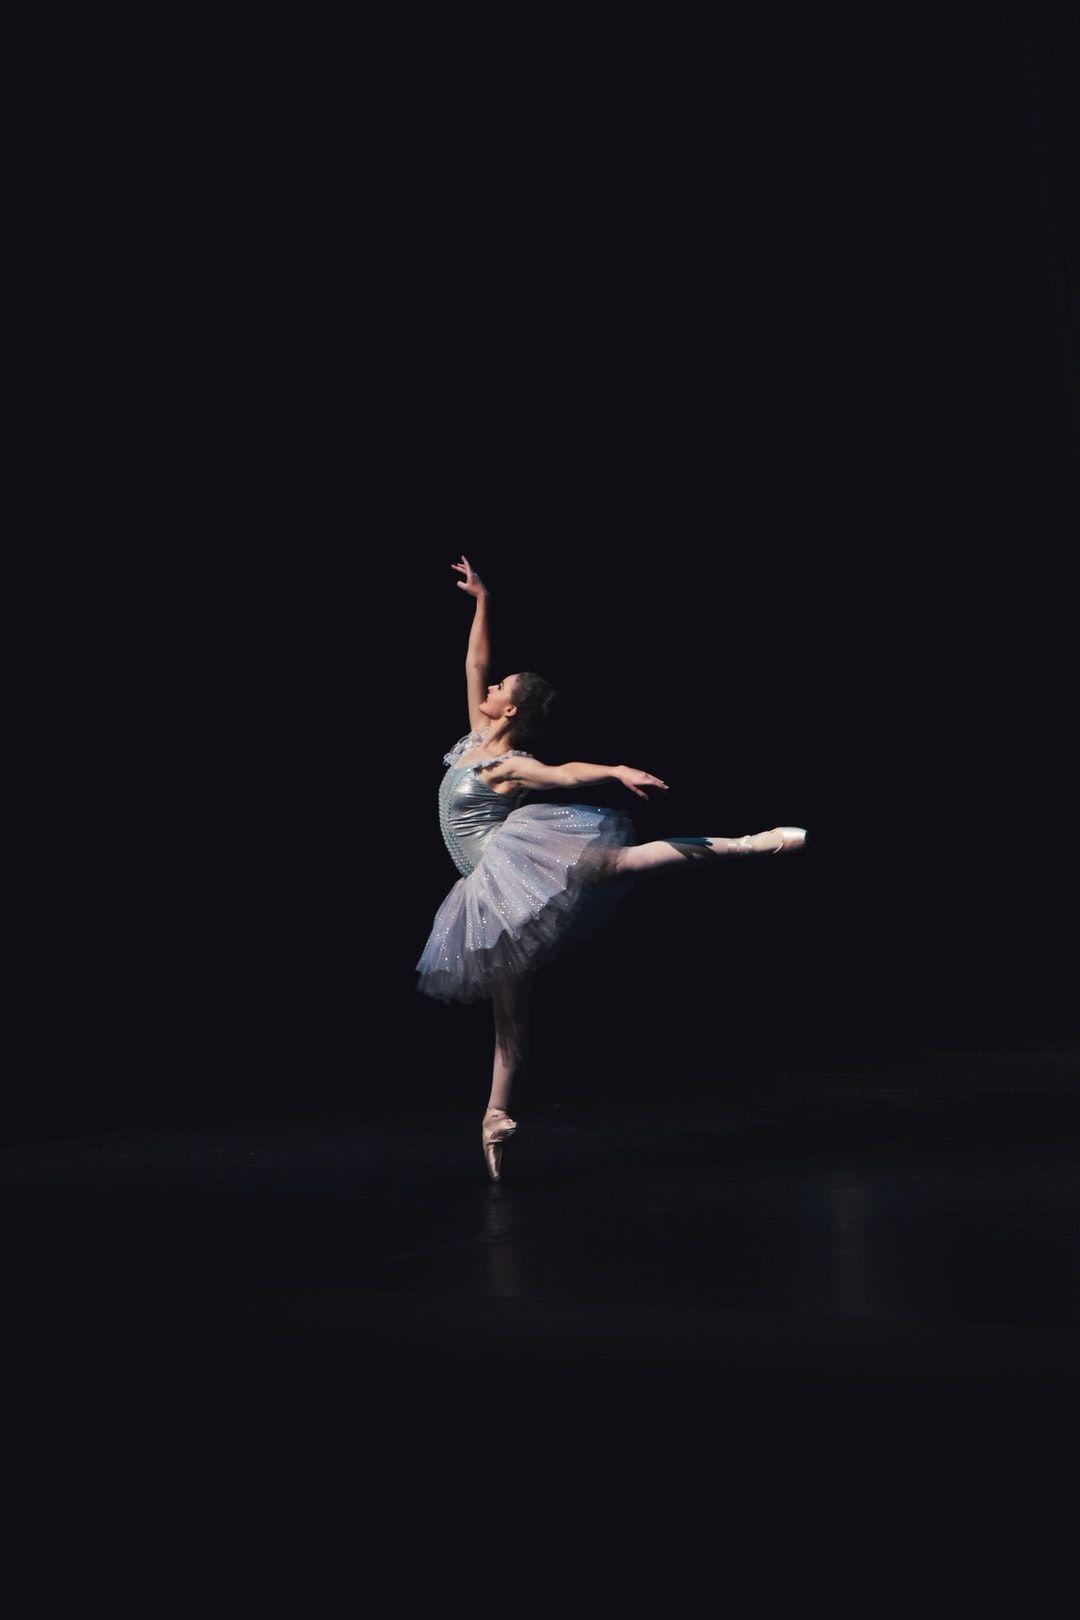 Ballet Dancer Picture. Download Free Image